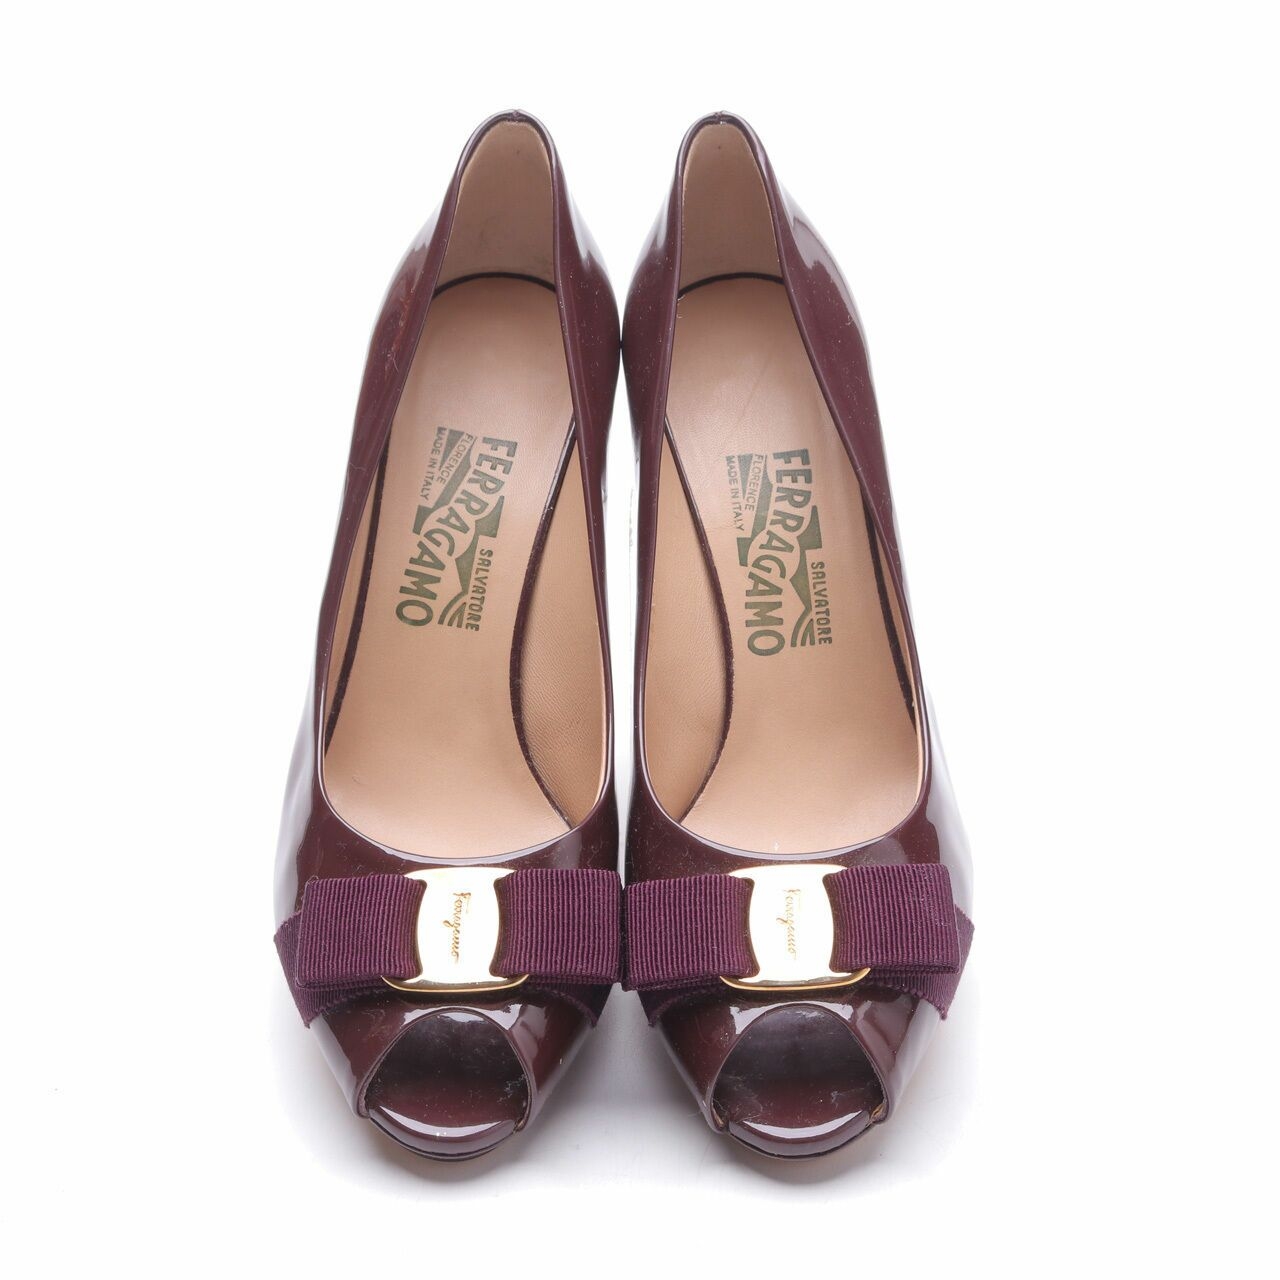 Salvatore Ferragamo Burgundy Patent Leather Peep-toe Heels